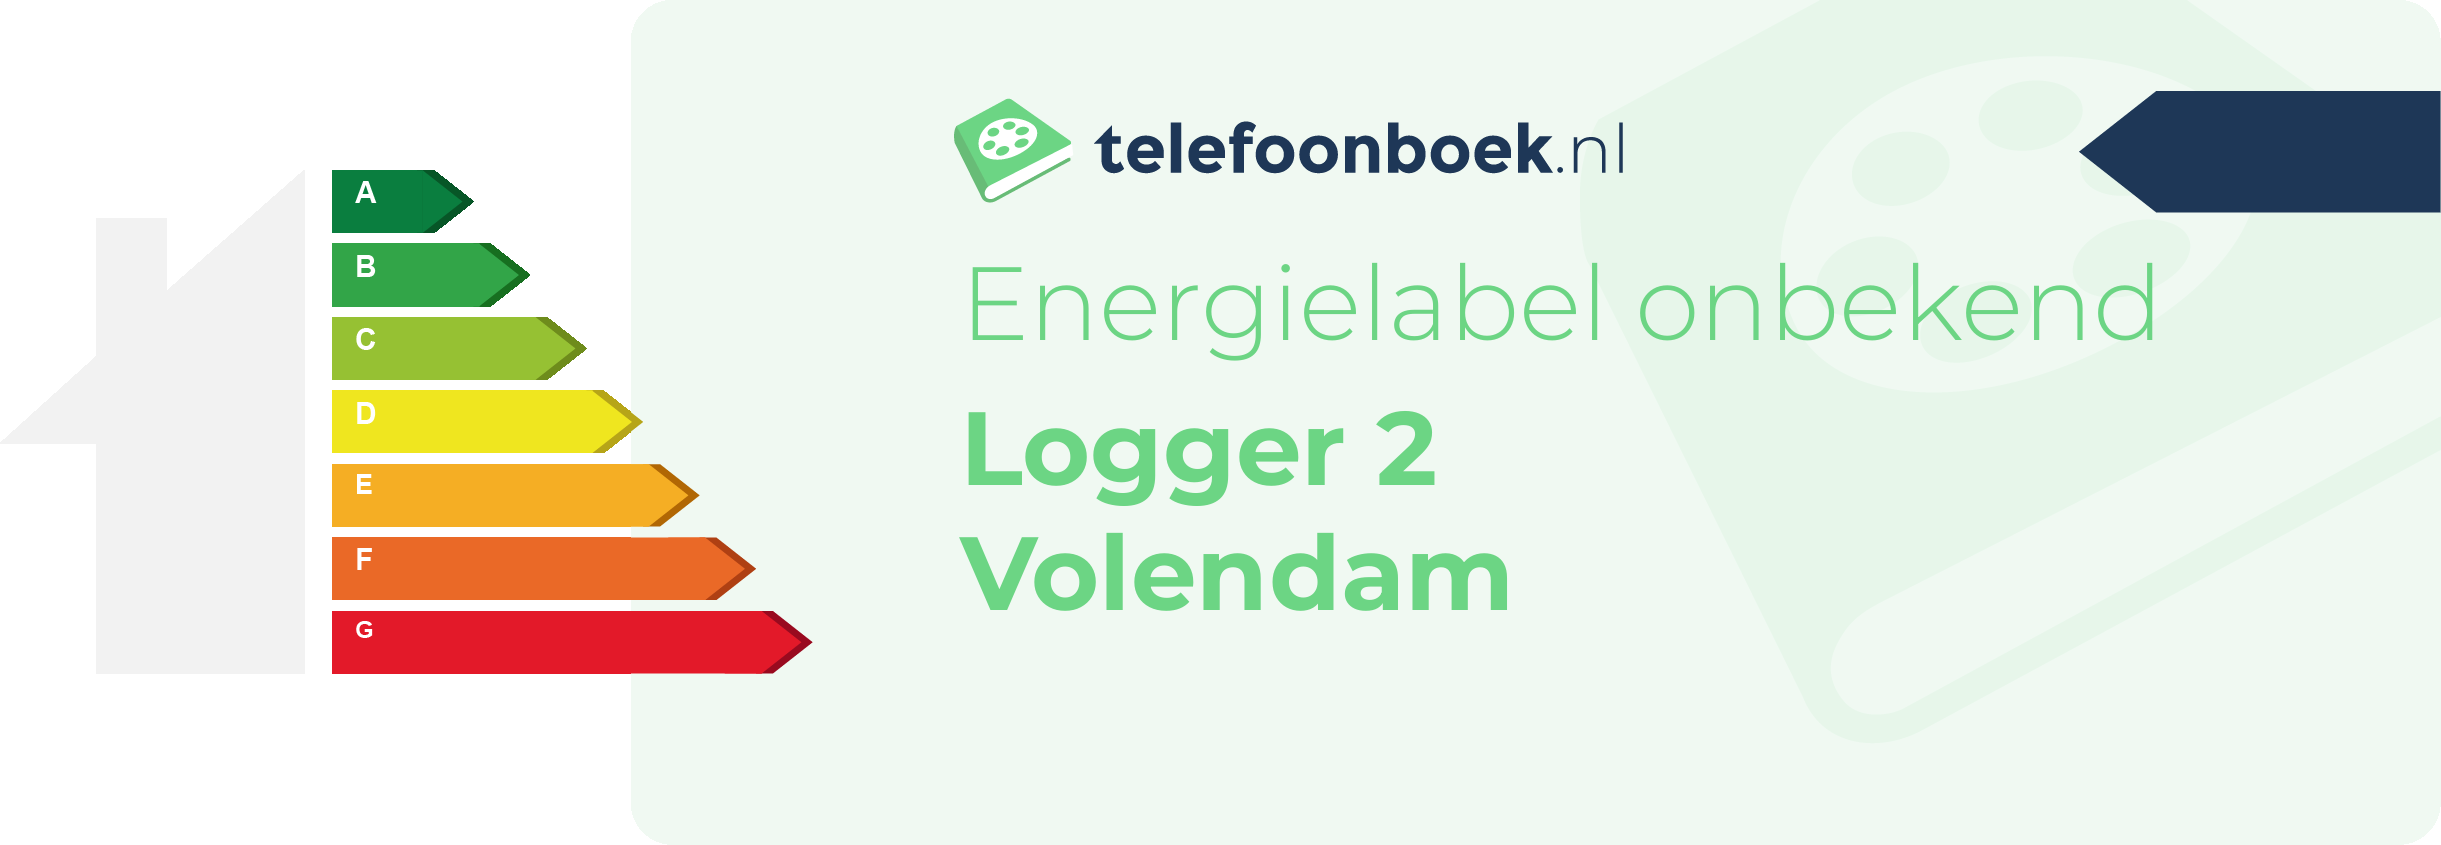 Energielabel Logger 2 Volendam